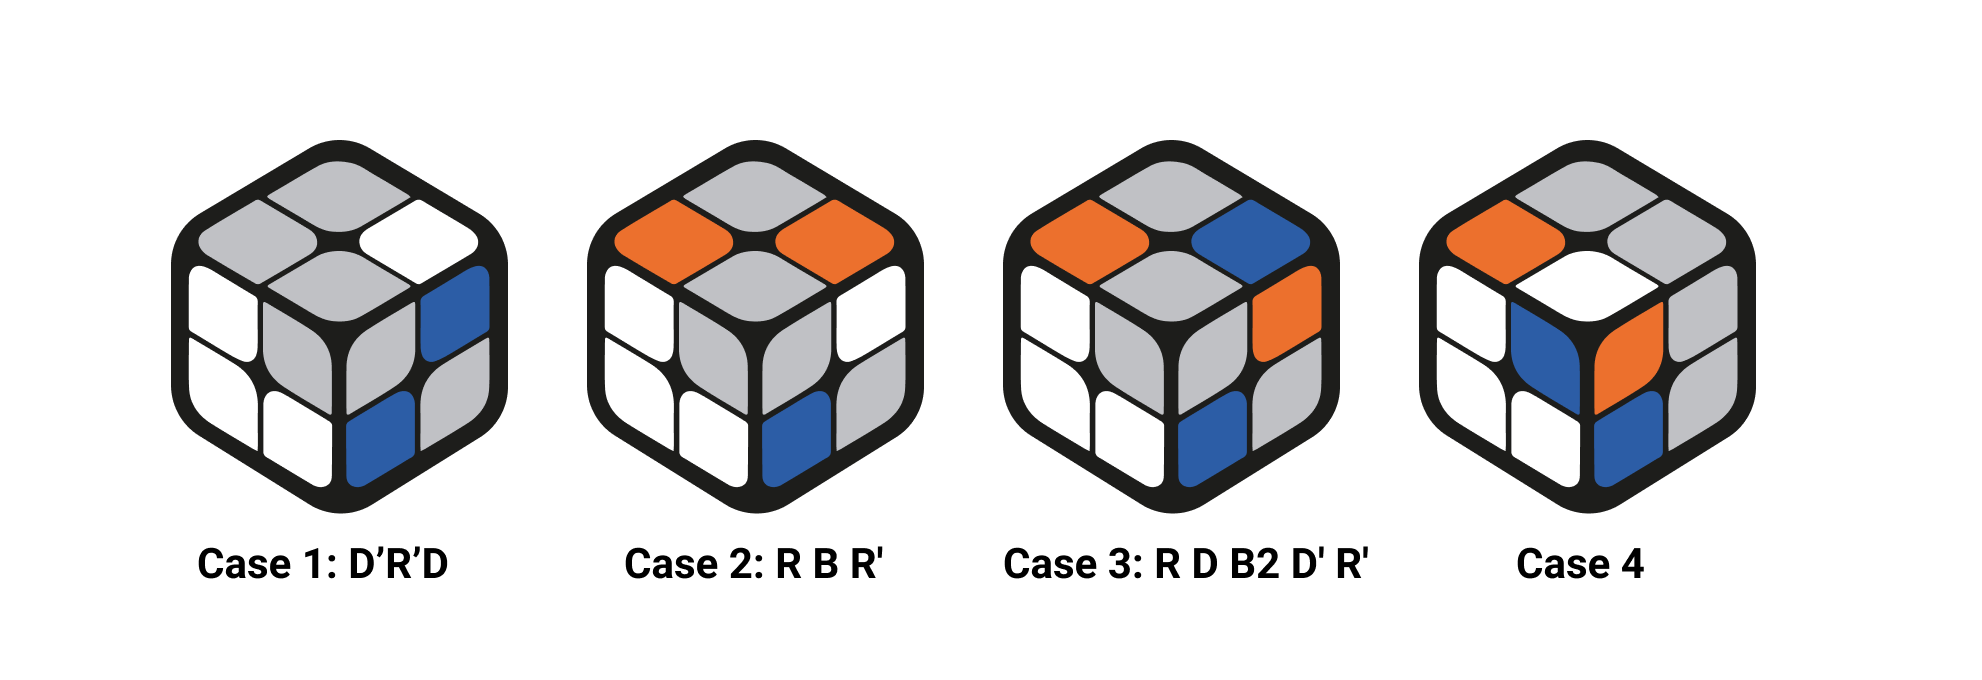 How to Solve 2x2 Rubik's Cube - GoCube